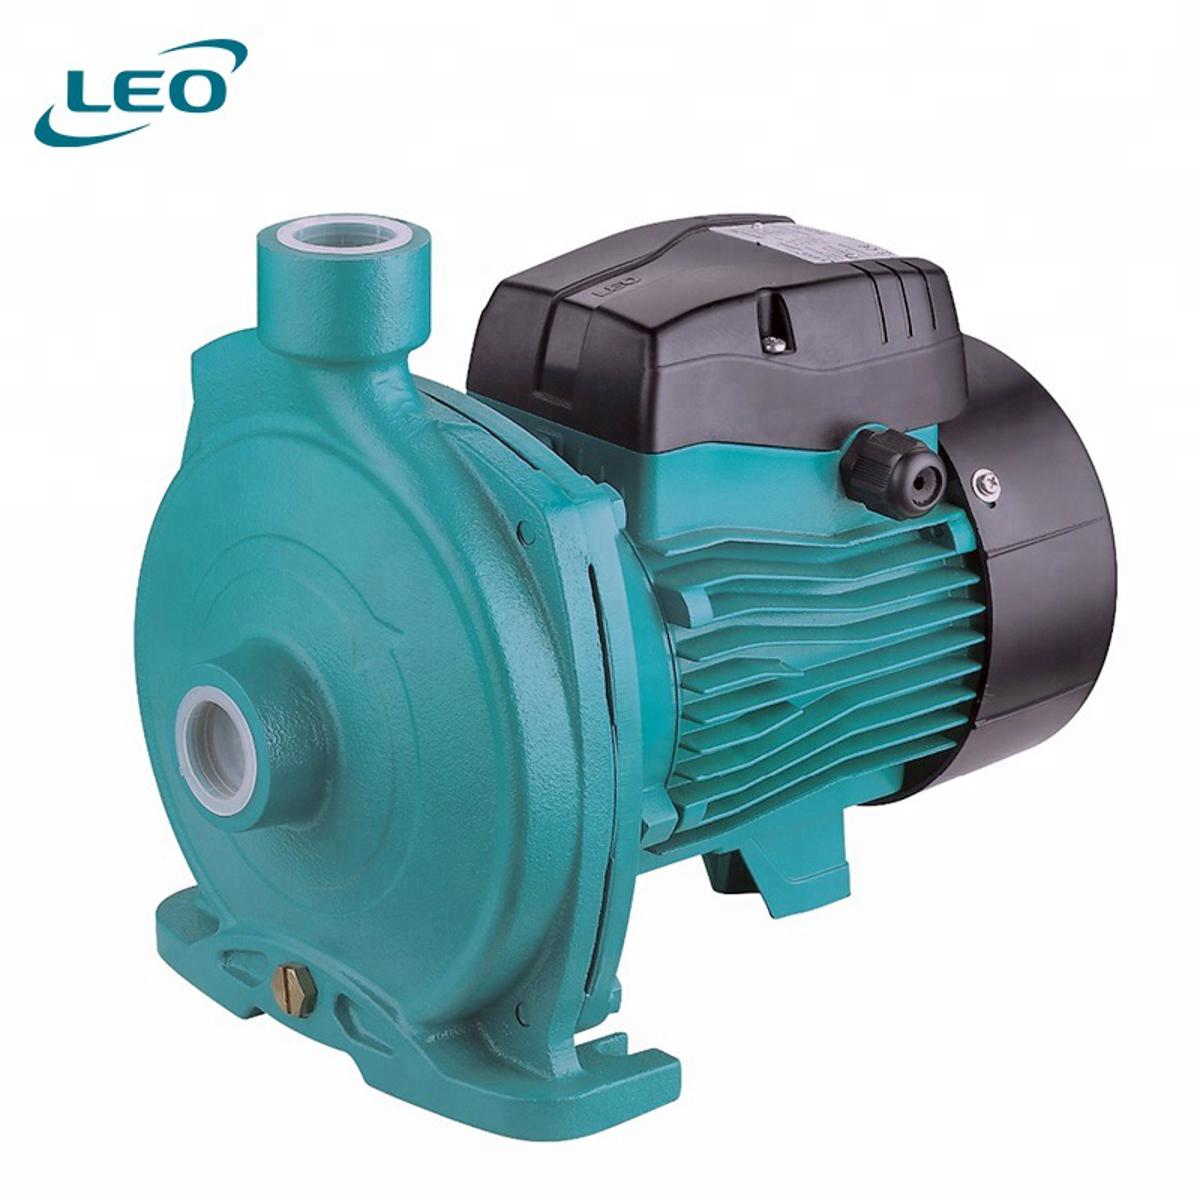 LEO - AC-150- 1500 W - 2.0 HP- Clean Water Centrifugal Pump- 380V~400V THREE PHASE- SIZE:- 1.25" X 1"- ITALY Patent DESIGN European STANDARD